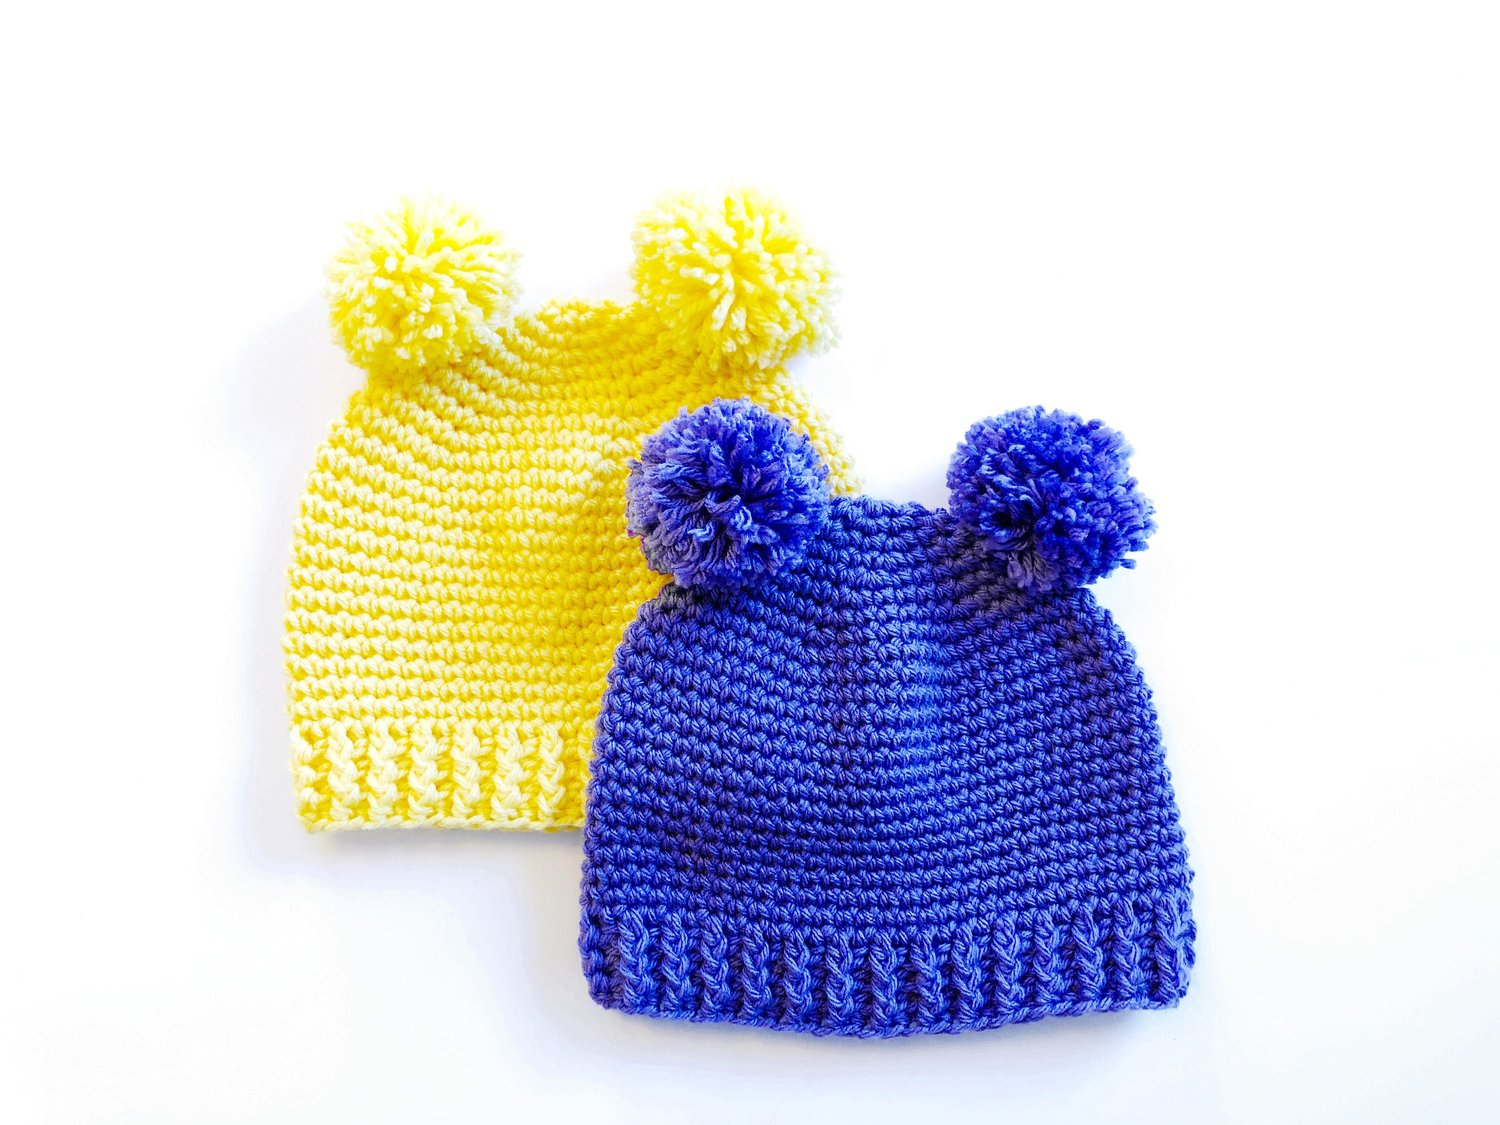 Dual Pom Poms Ball Knitted Baby Kid Caps Toddler Crochet Beanie